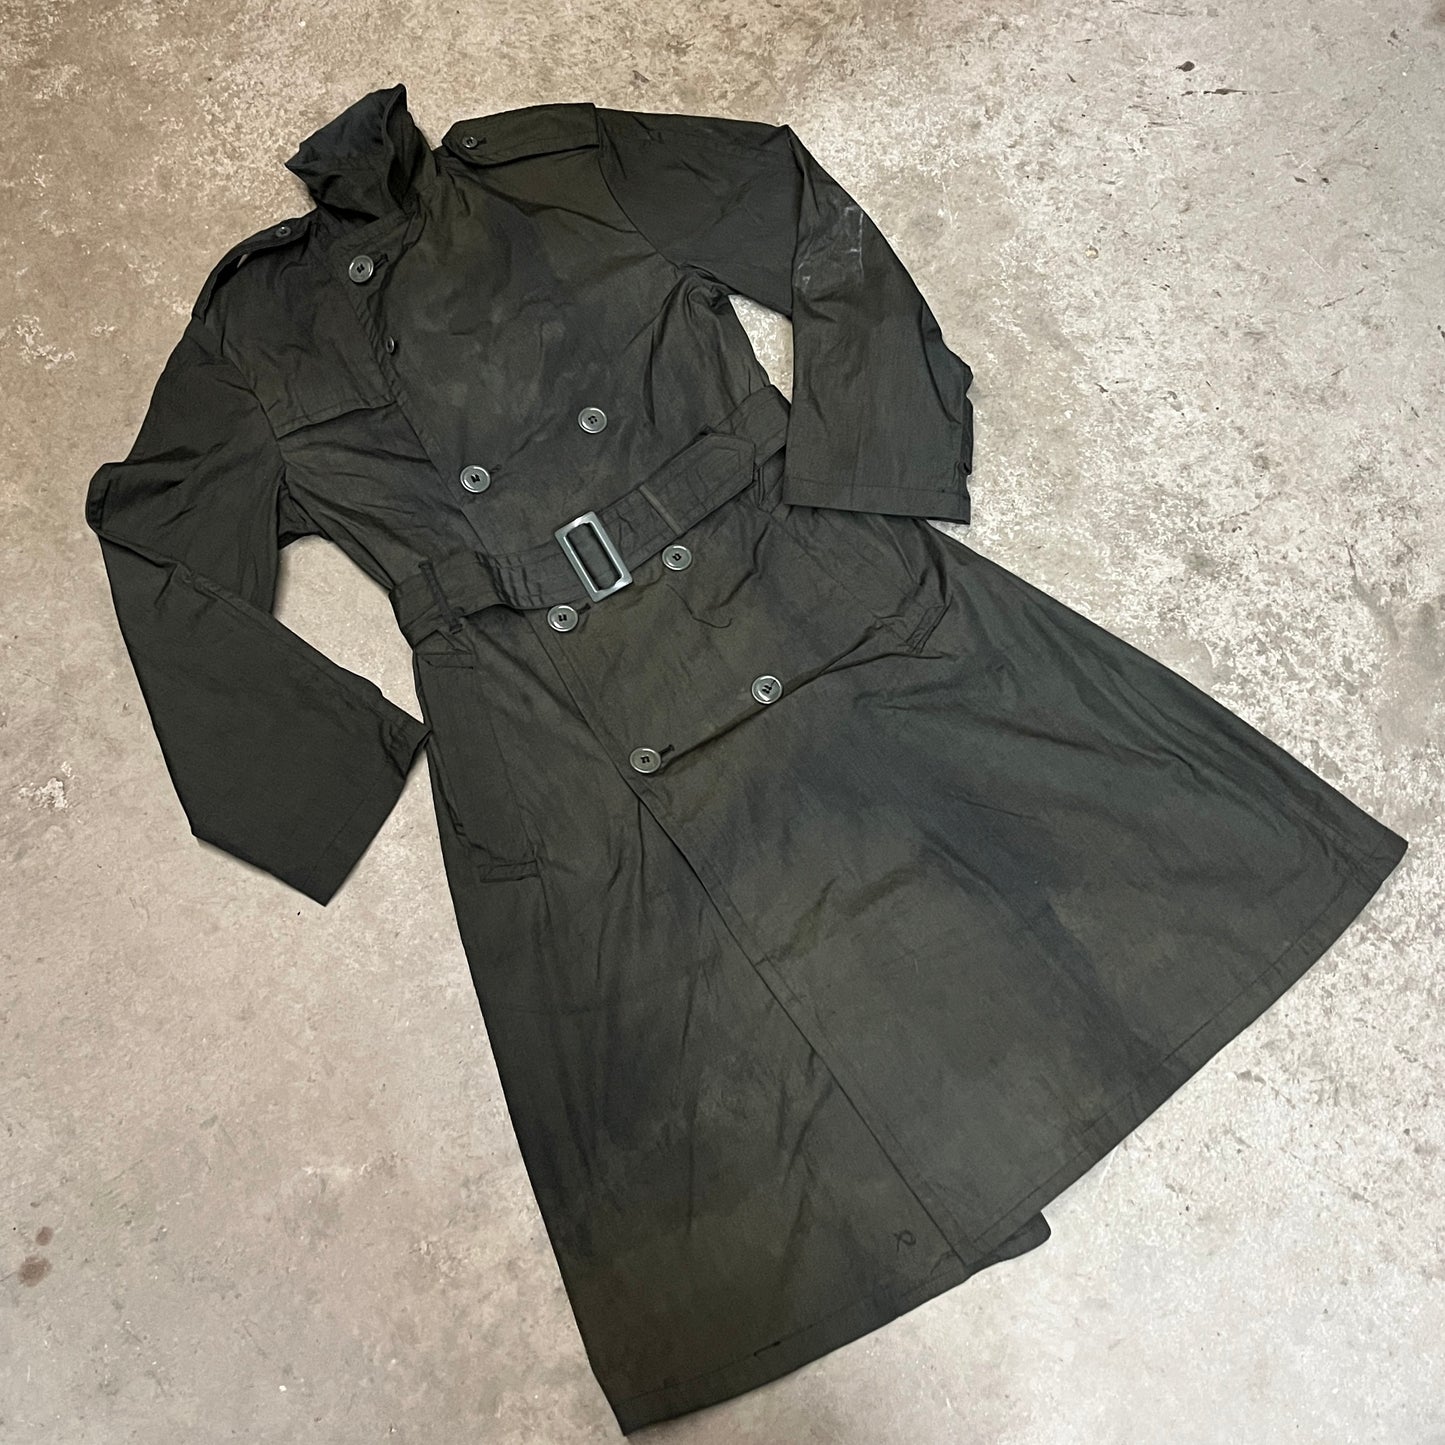 Dirty Black Overdyed US Army Rain Coat